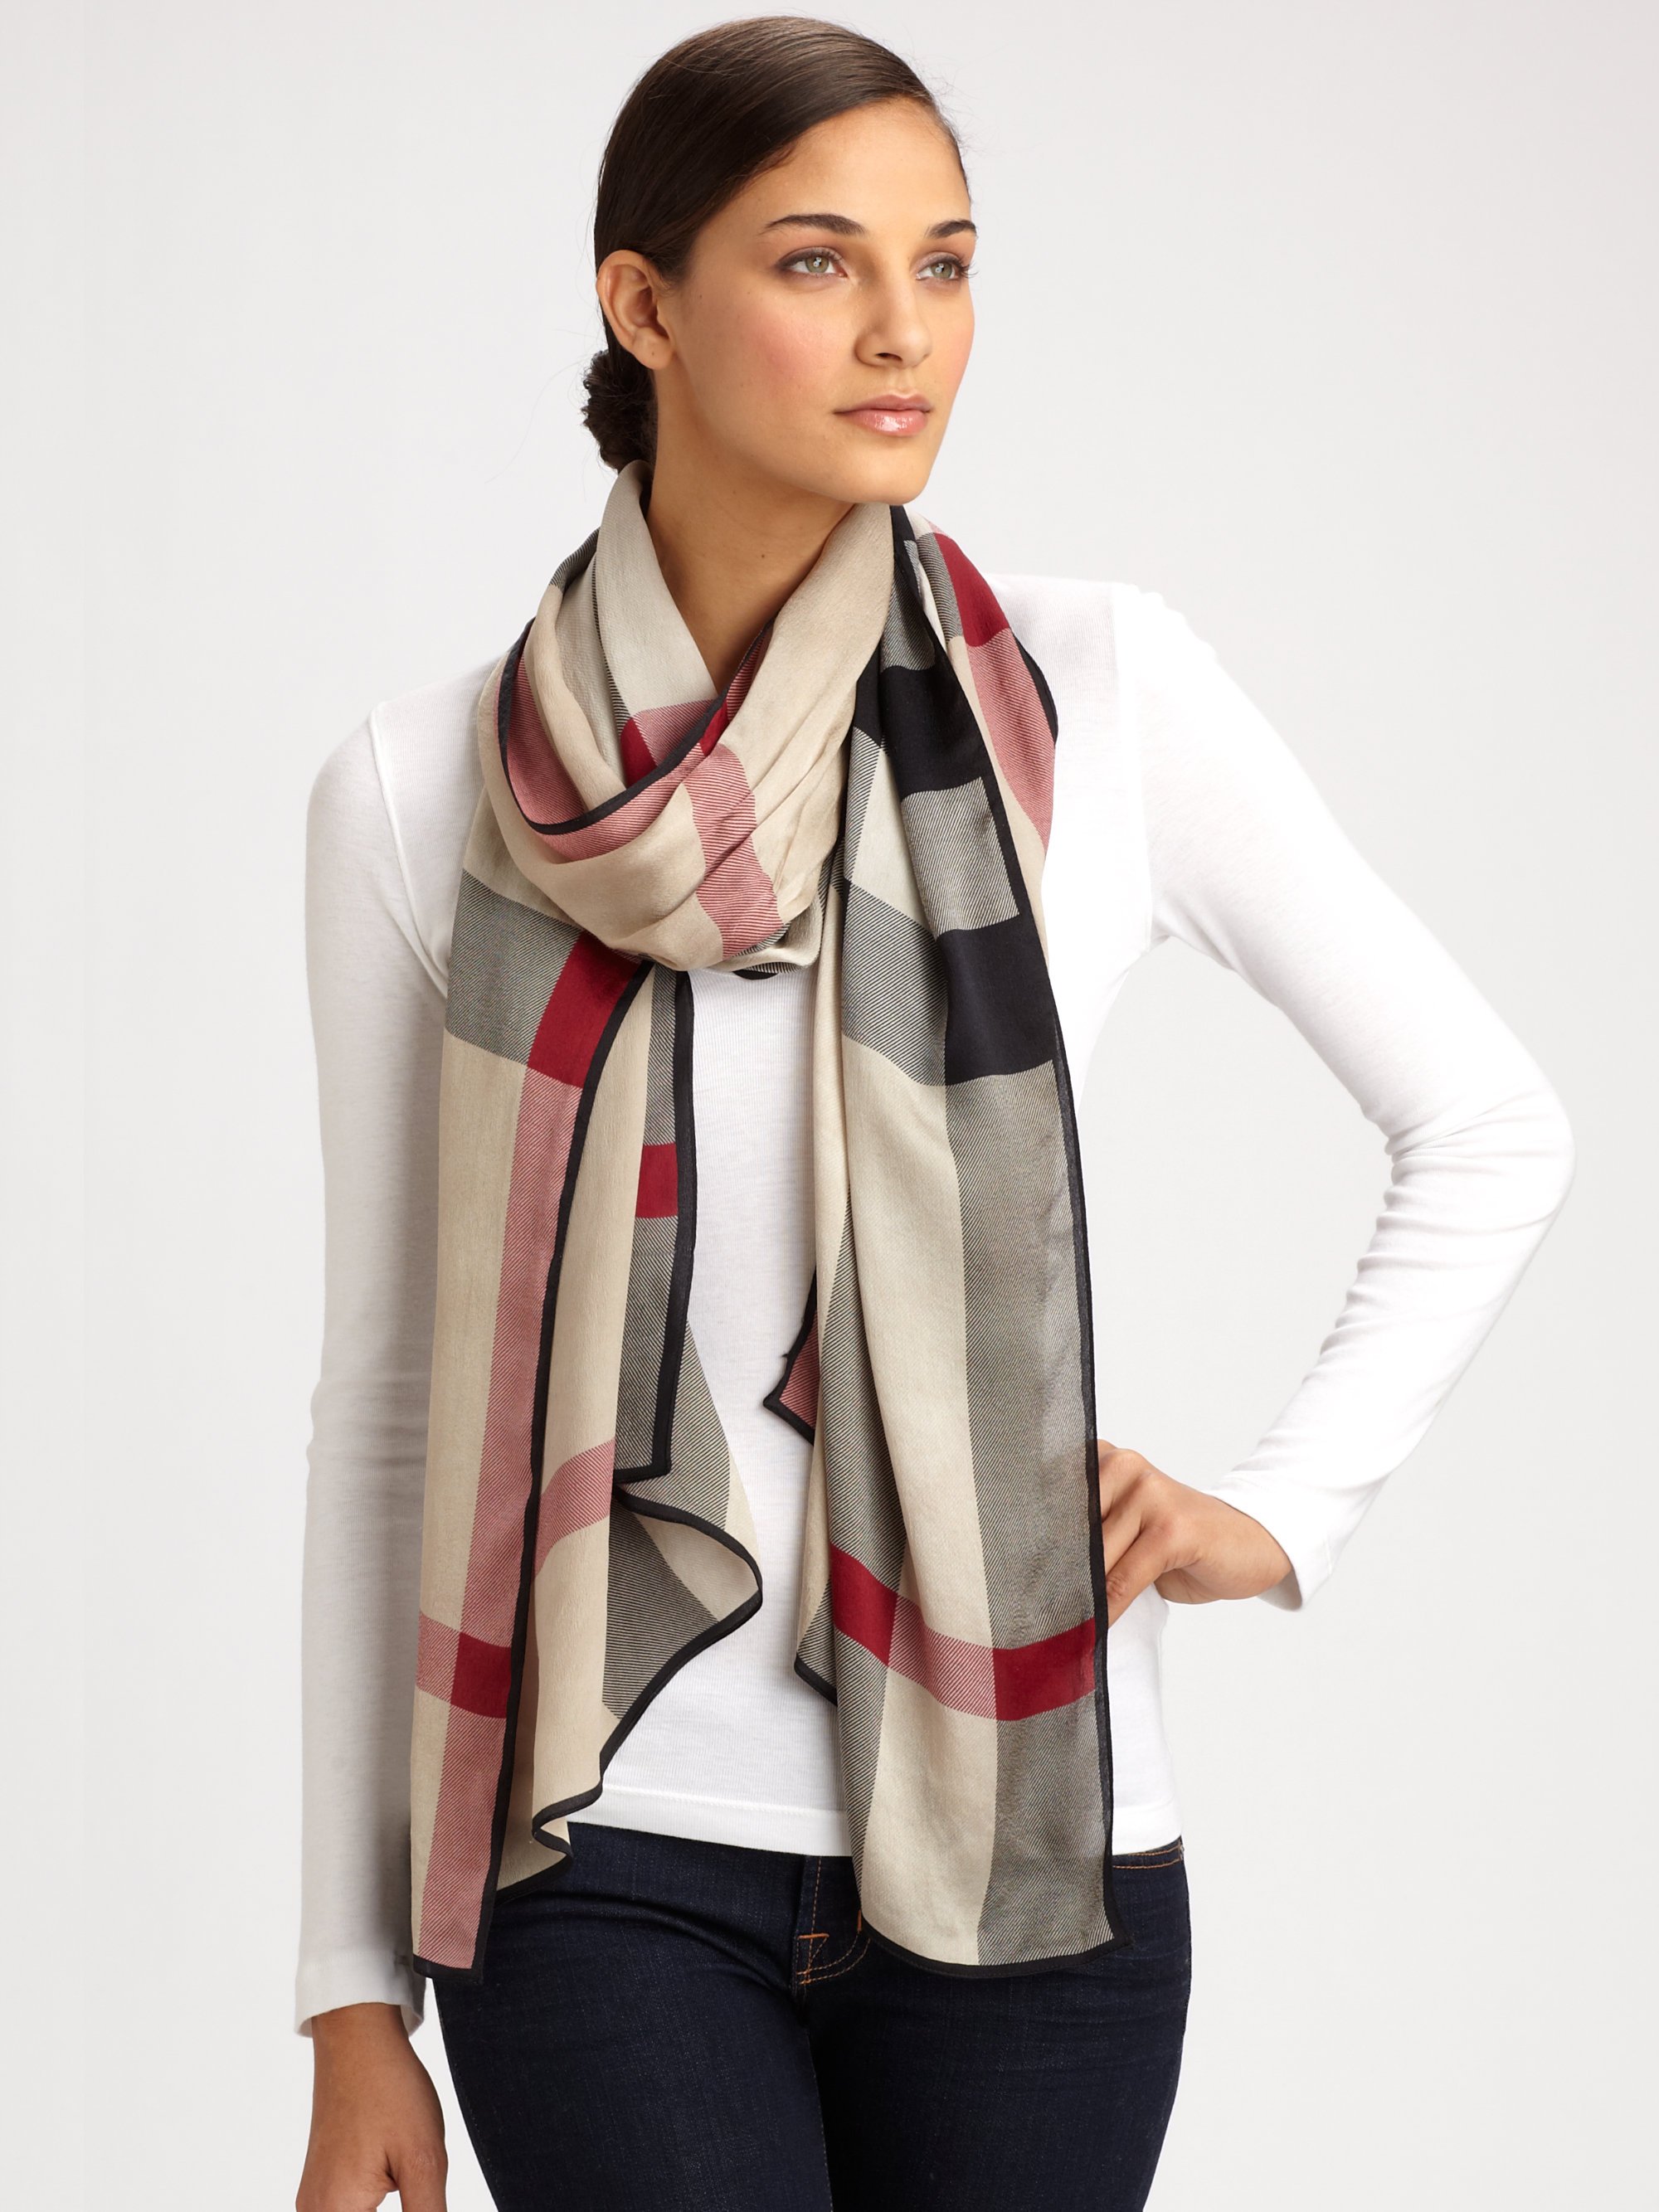 burberry scarf womens 2013